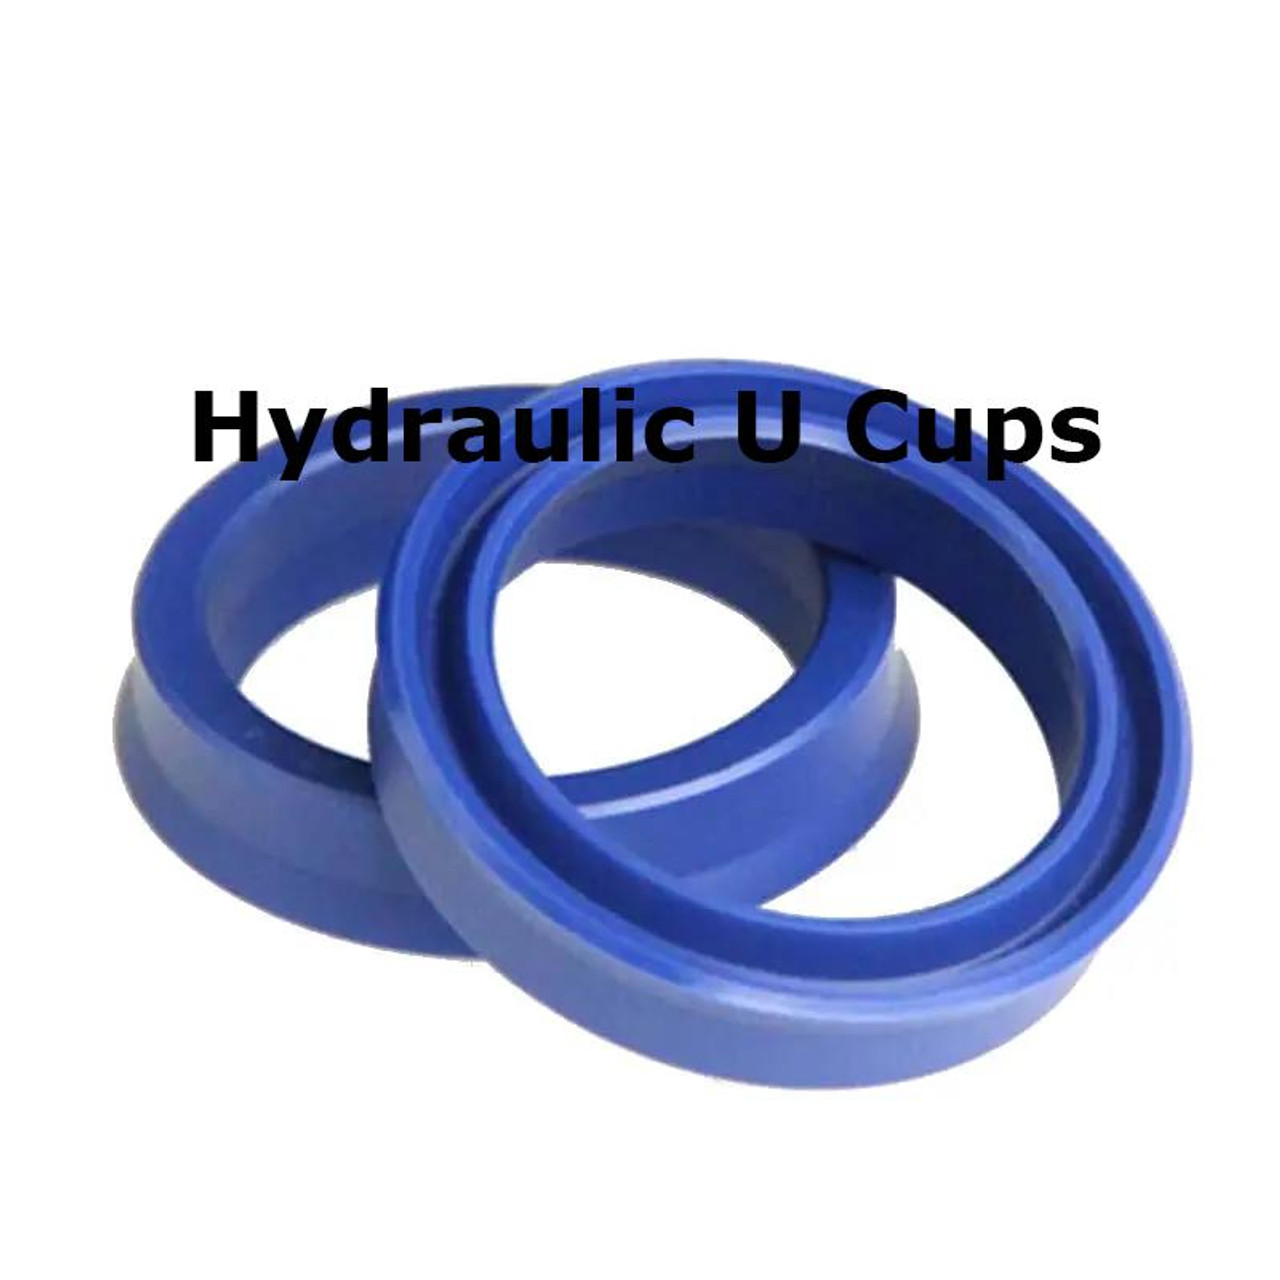 2438U352S10 Rod U Cup Seal fits Kobelco Cylinders